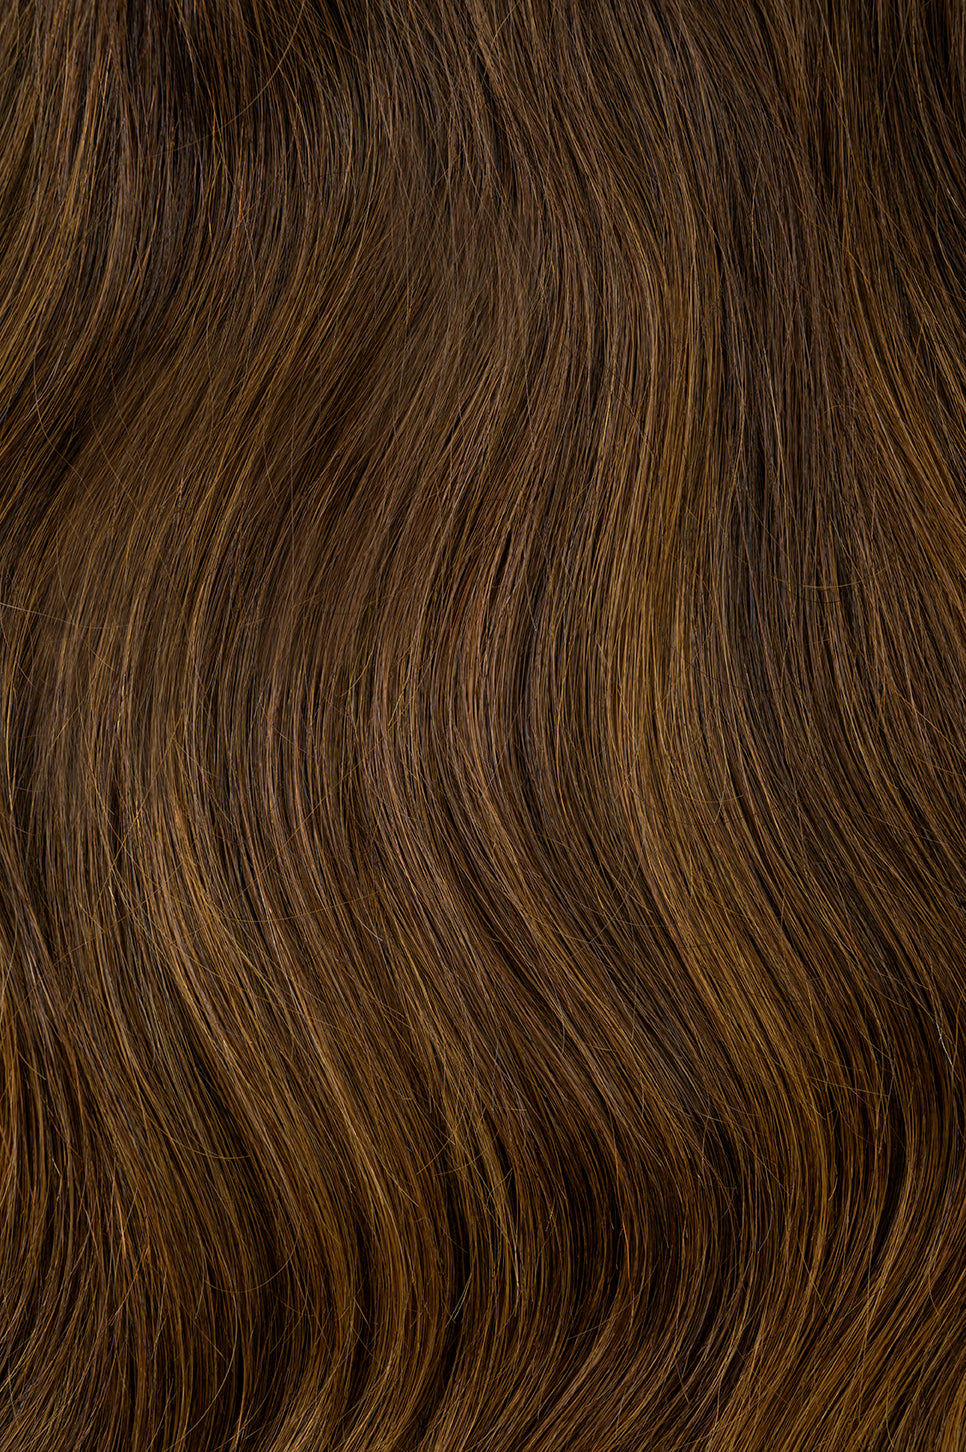 #Chocolate Brown Balayage Genius Hair Weft Extensions